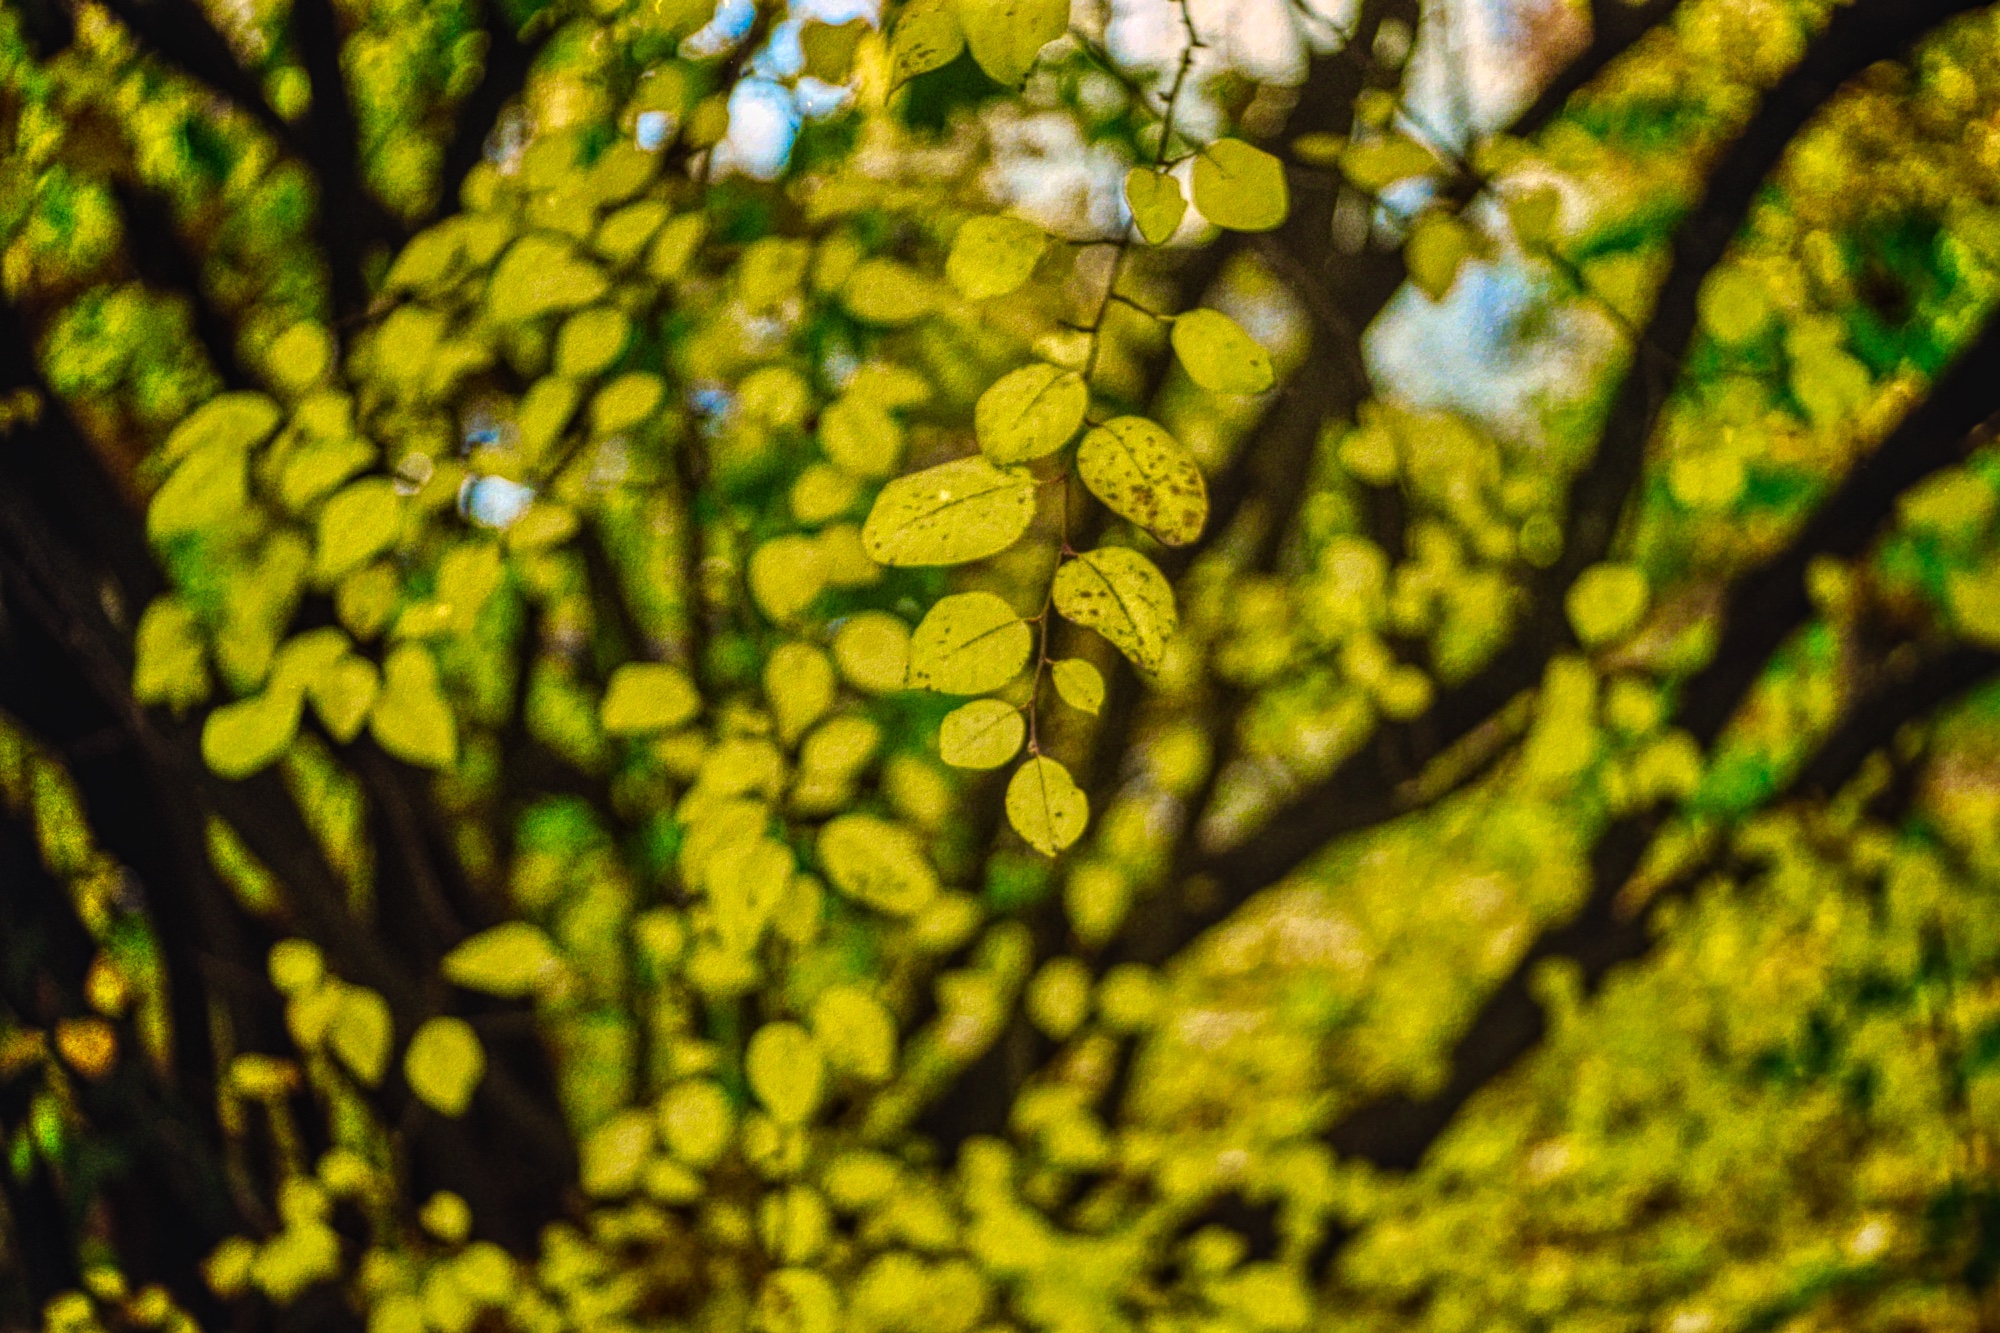 Gelbe Blätter - Agfa Flexilette mit Agfa Apotar 1:2.8/45 mm auf Kodak Color Plus 200